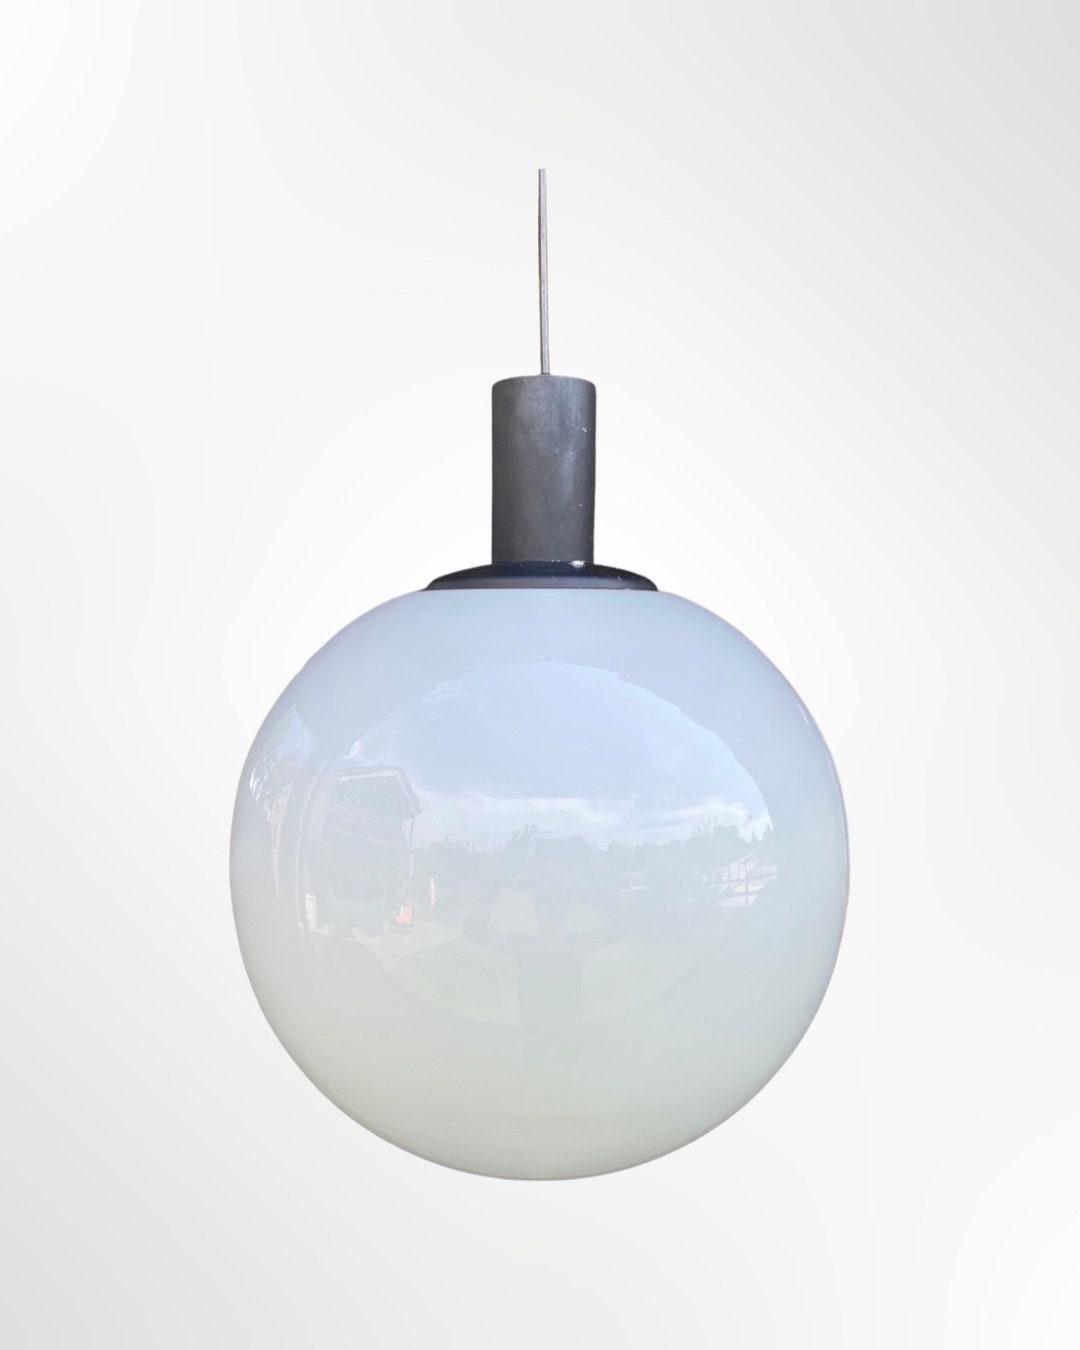 1950s Big Glass ART DECO Pendant Lamps | Vintage Pendant Lighting Globe / Ball Shaped Milk Glass